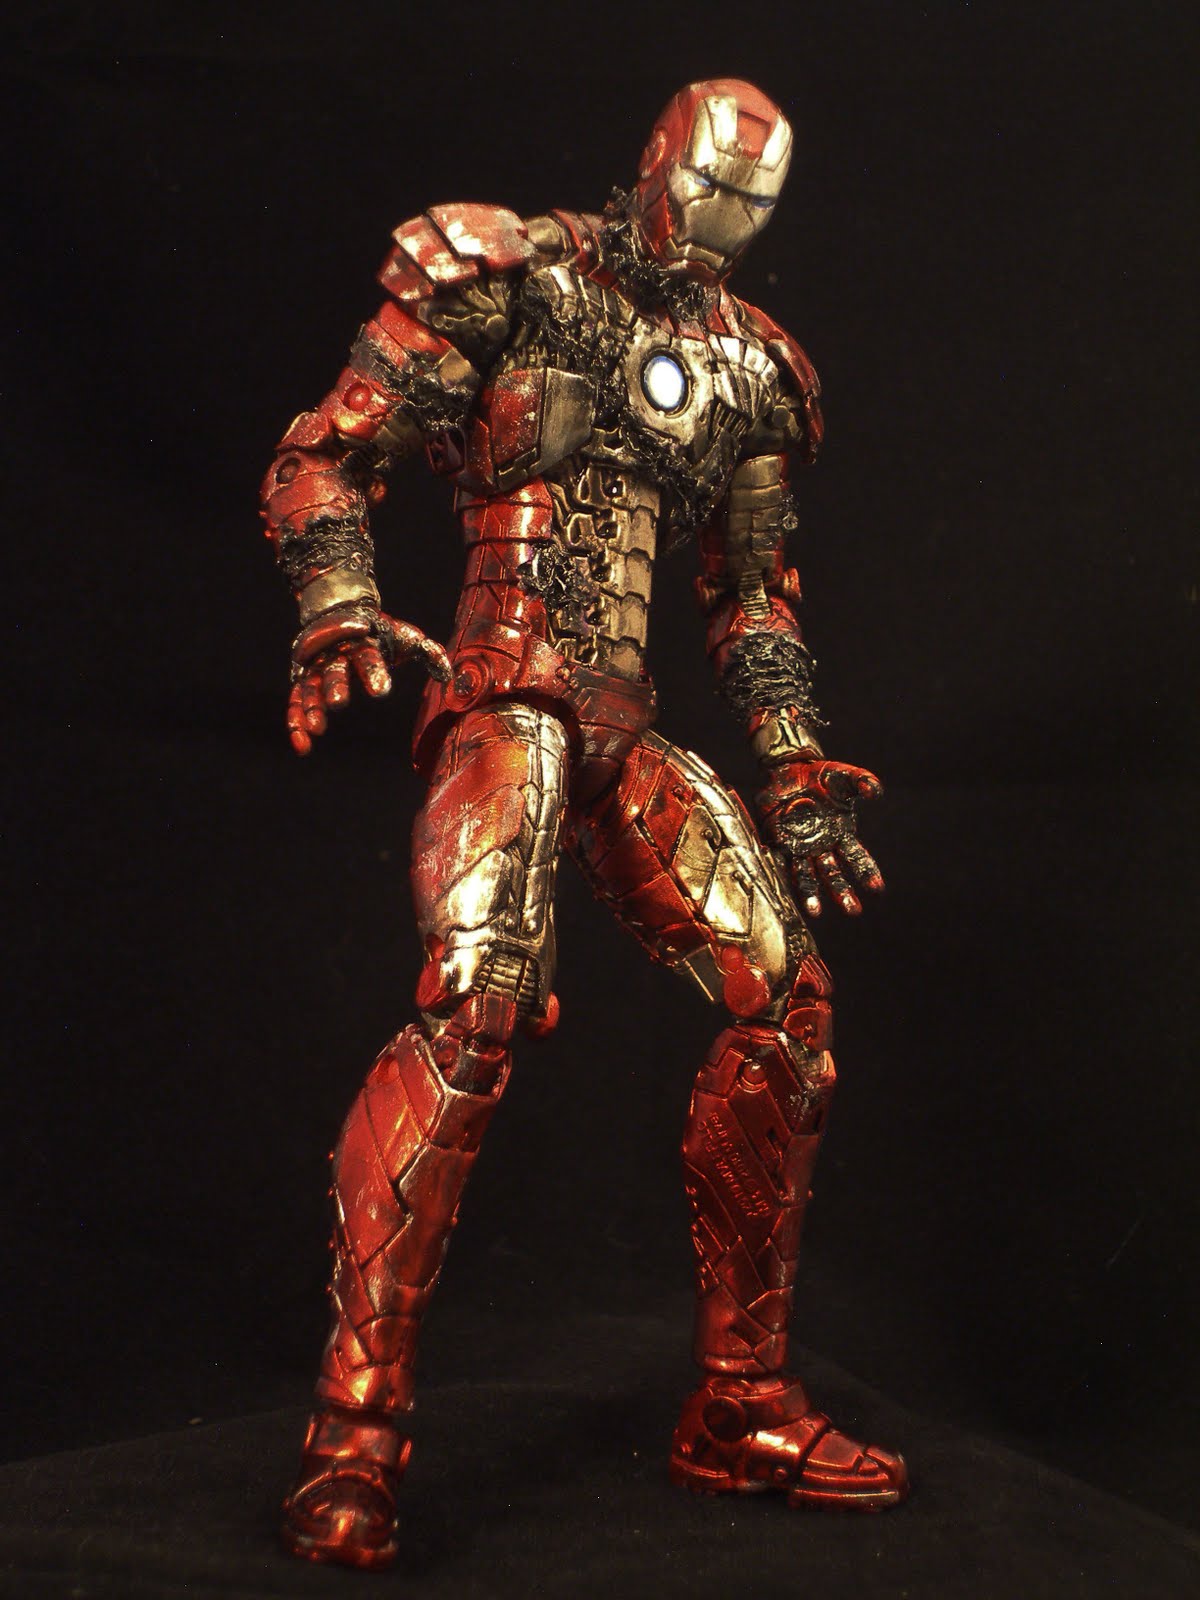 Iron Man 2 Suitcase Armor